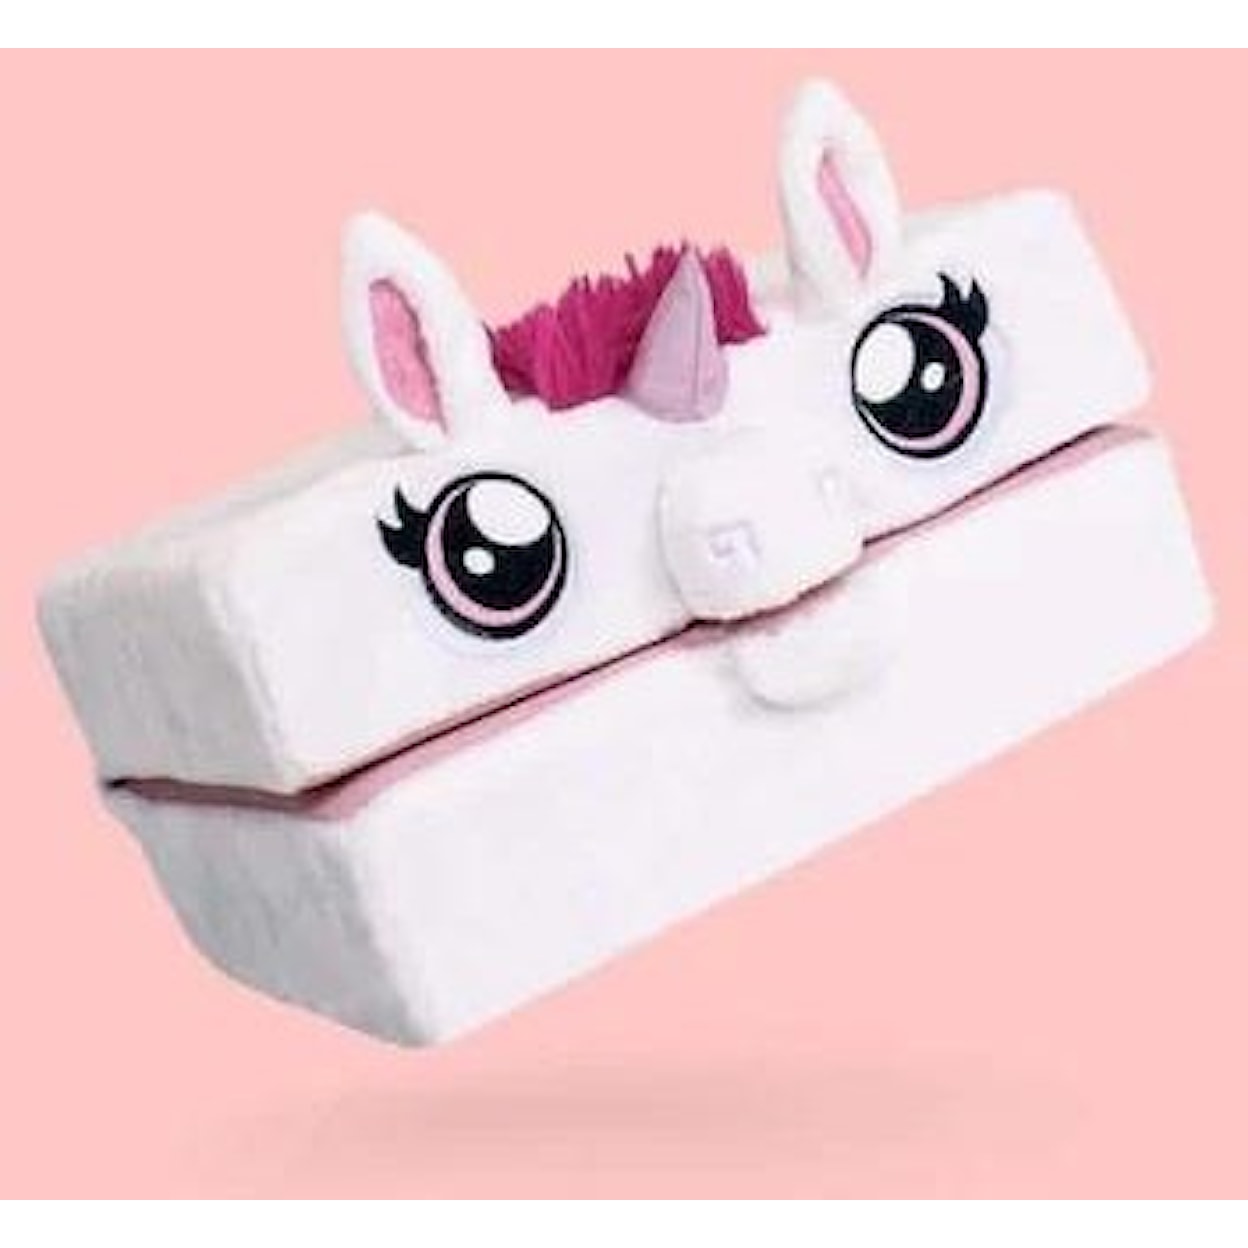 Malouf Pillow Cube Pillow Cub - Uniquely Unicorn